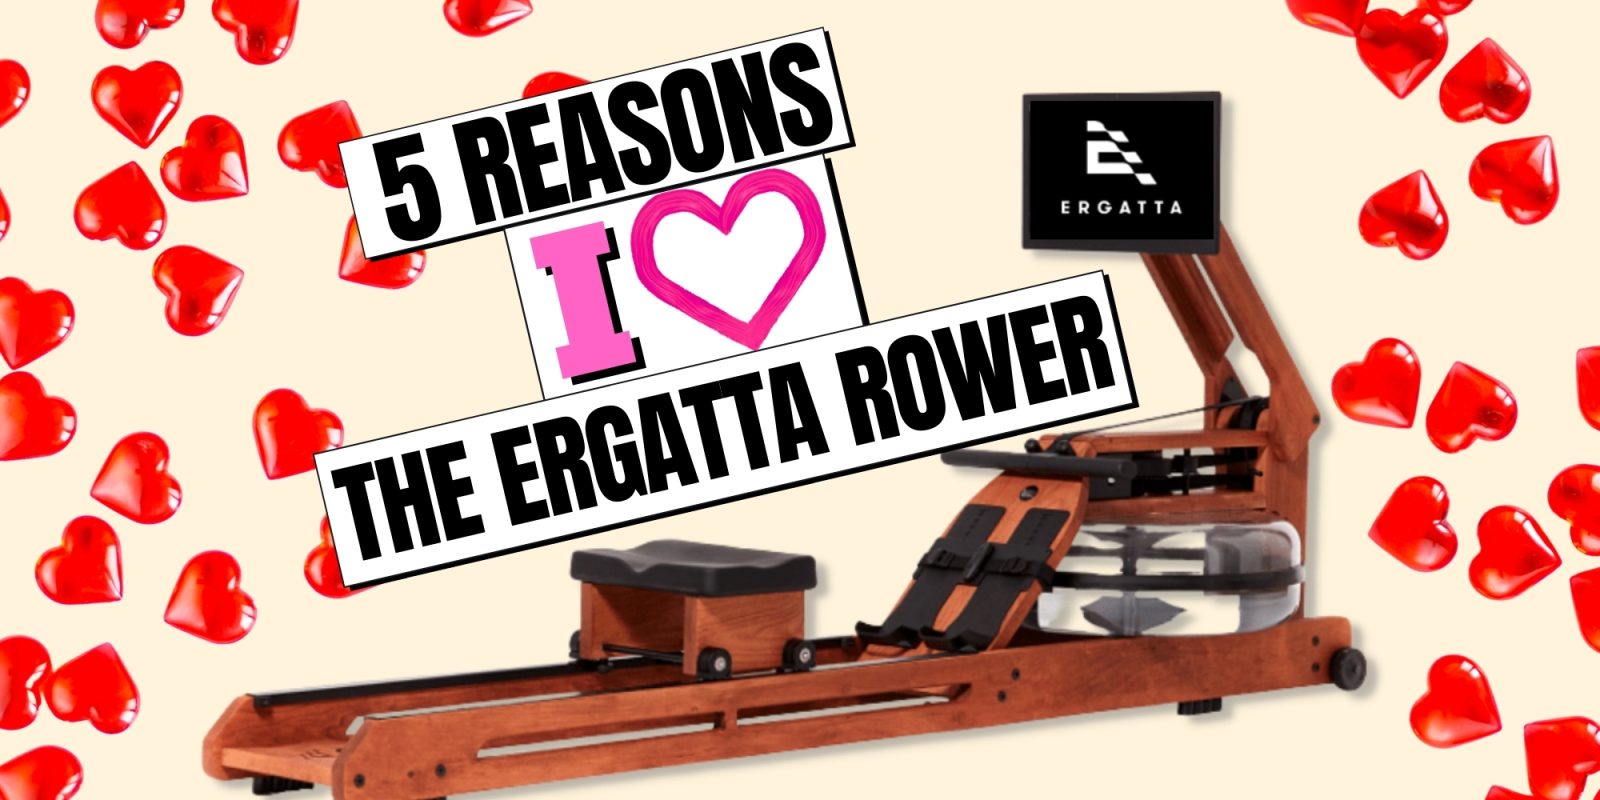 Five reasons why I love the Ergatta Rower